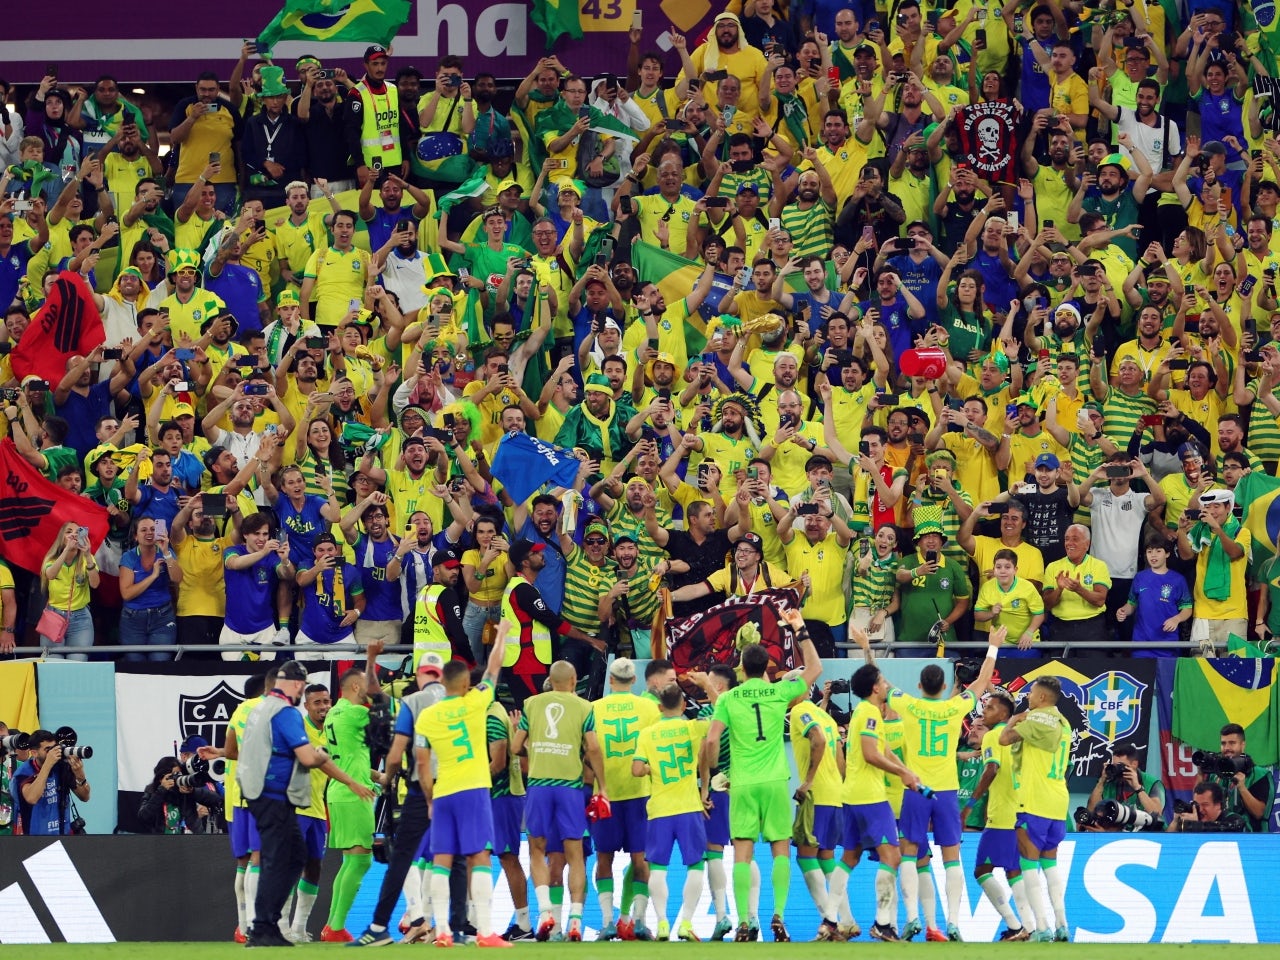 Cameroon vs Brazil - World Cup: Team news, lineups & prediction